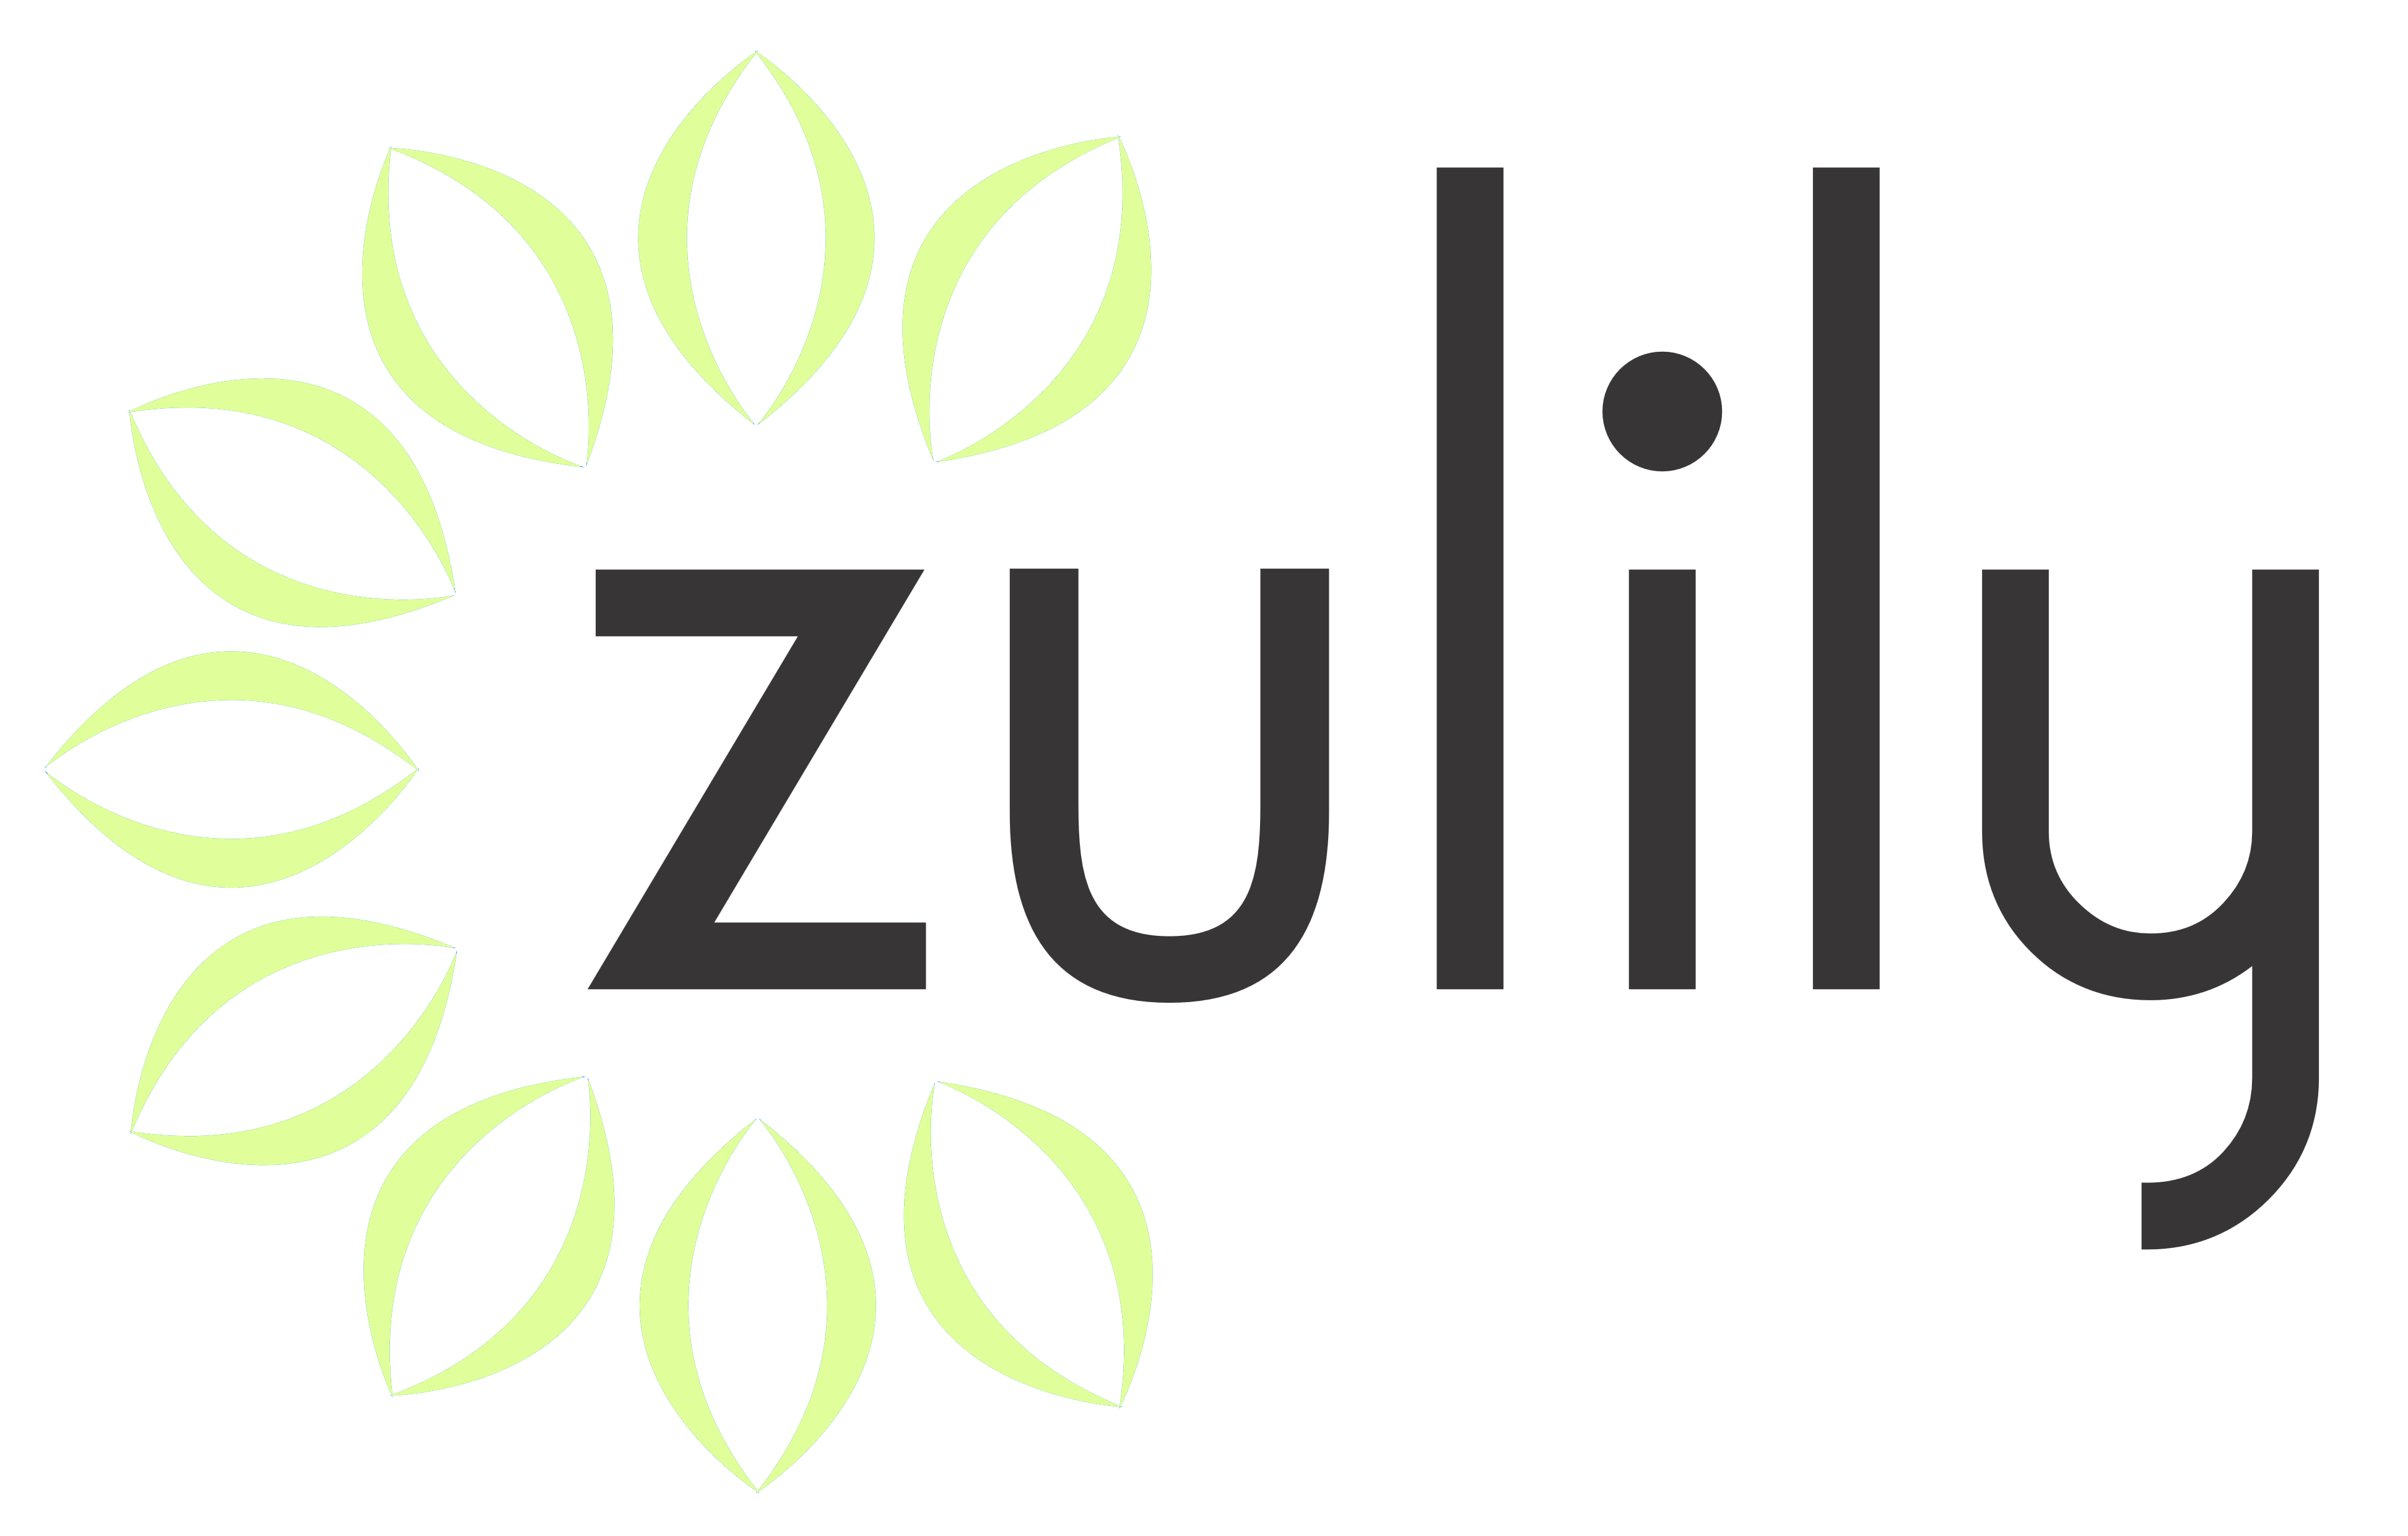 Zulily Logo - Zulily